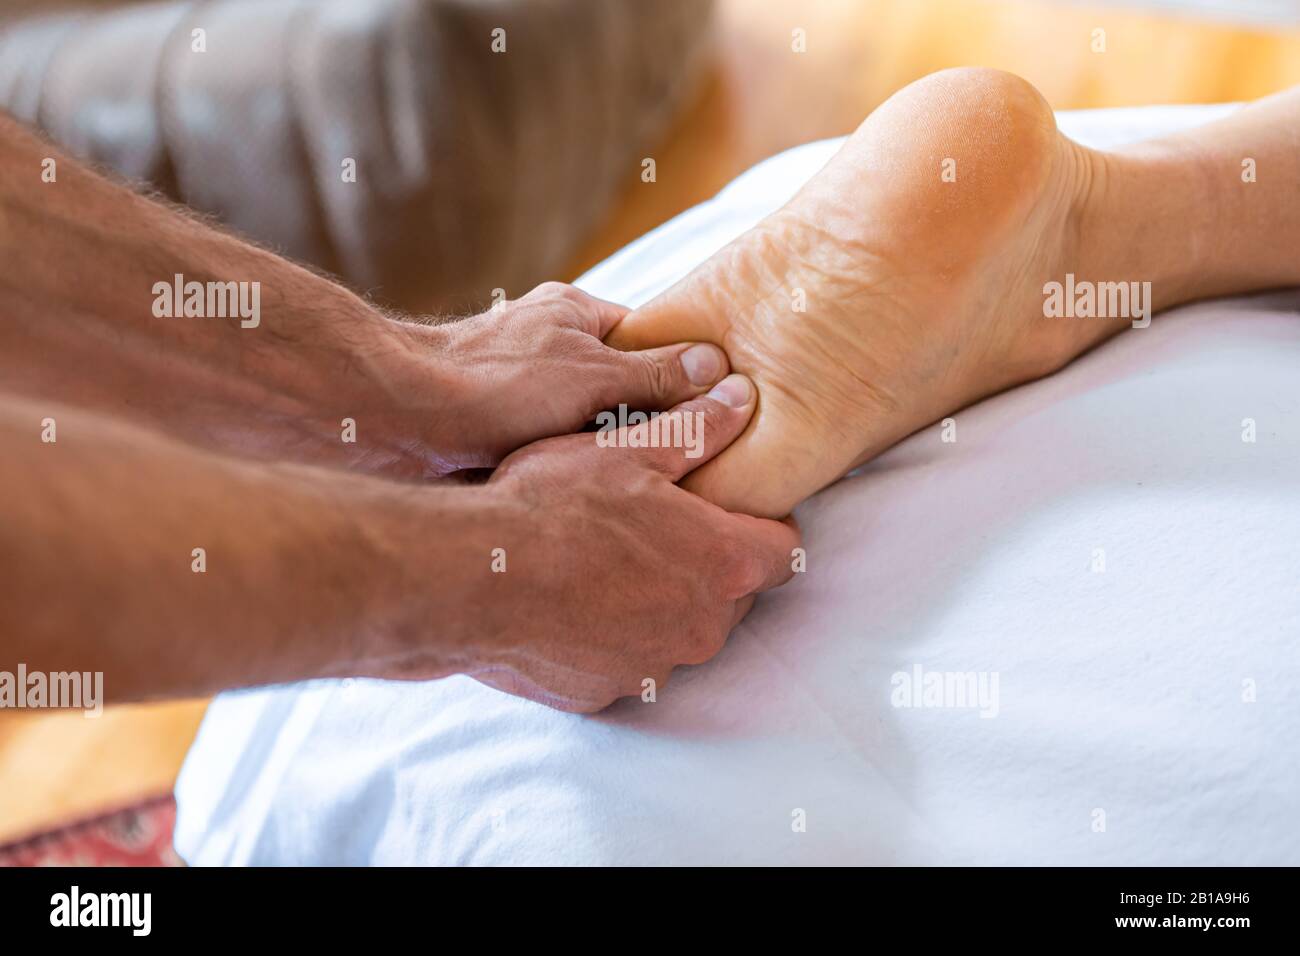 Young man having feet massage in the spa salon. Sports massage